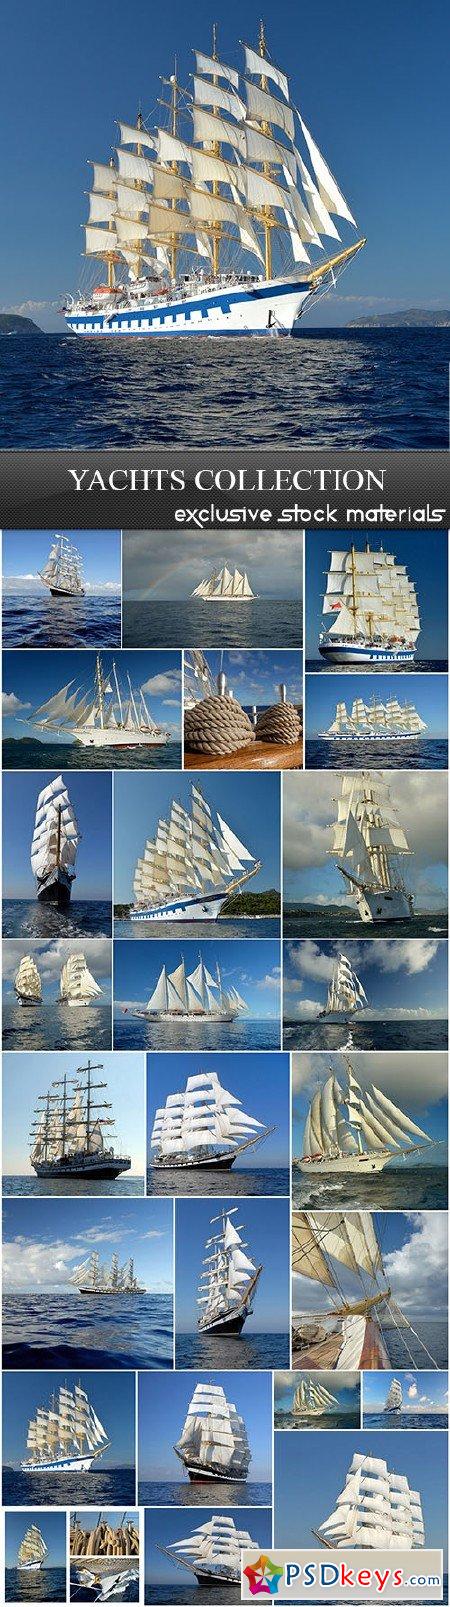 Yachts Collection 25xUHQ JPEG